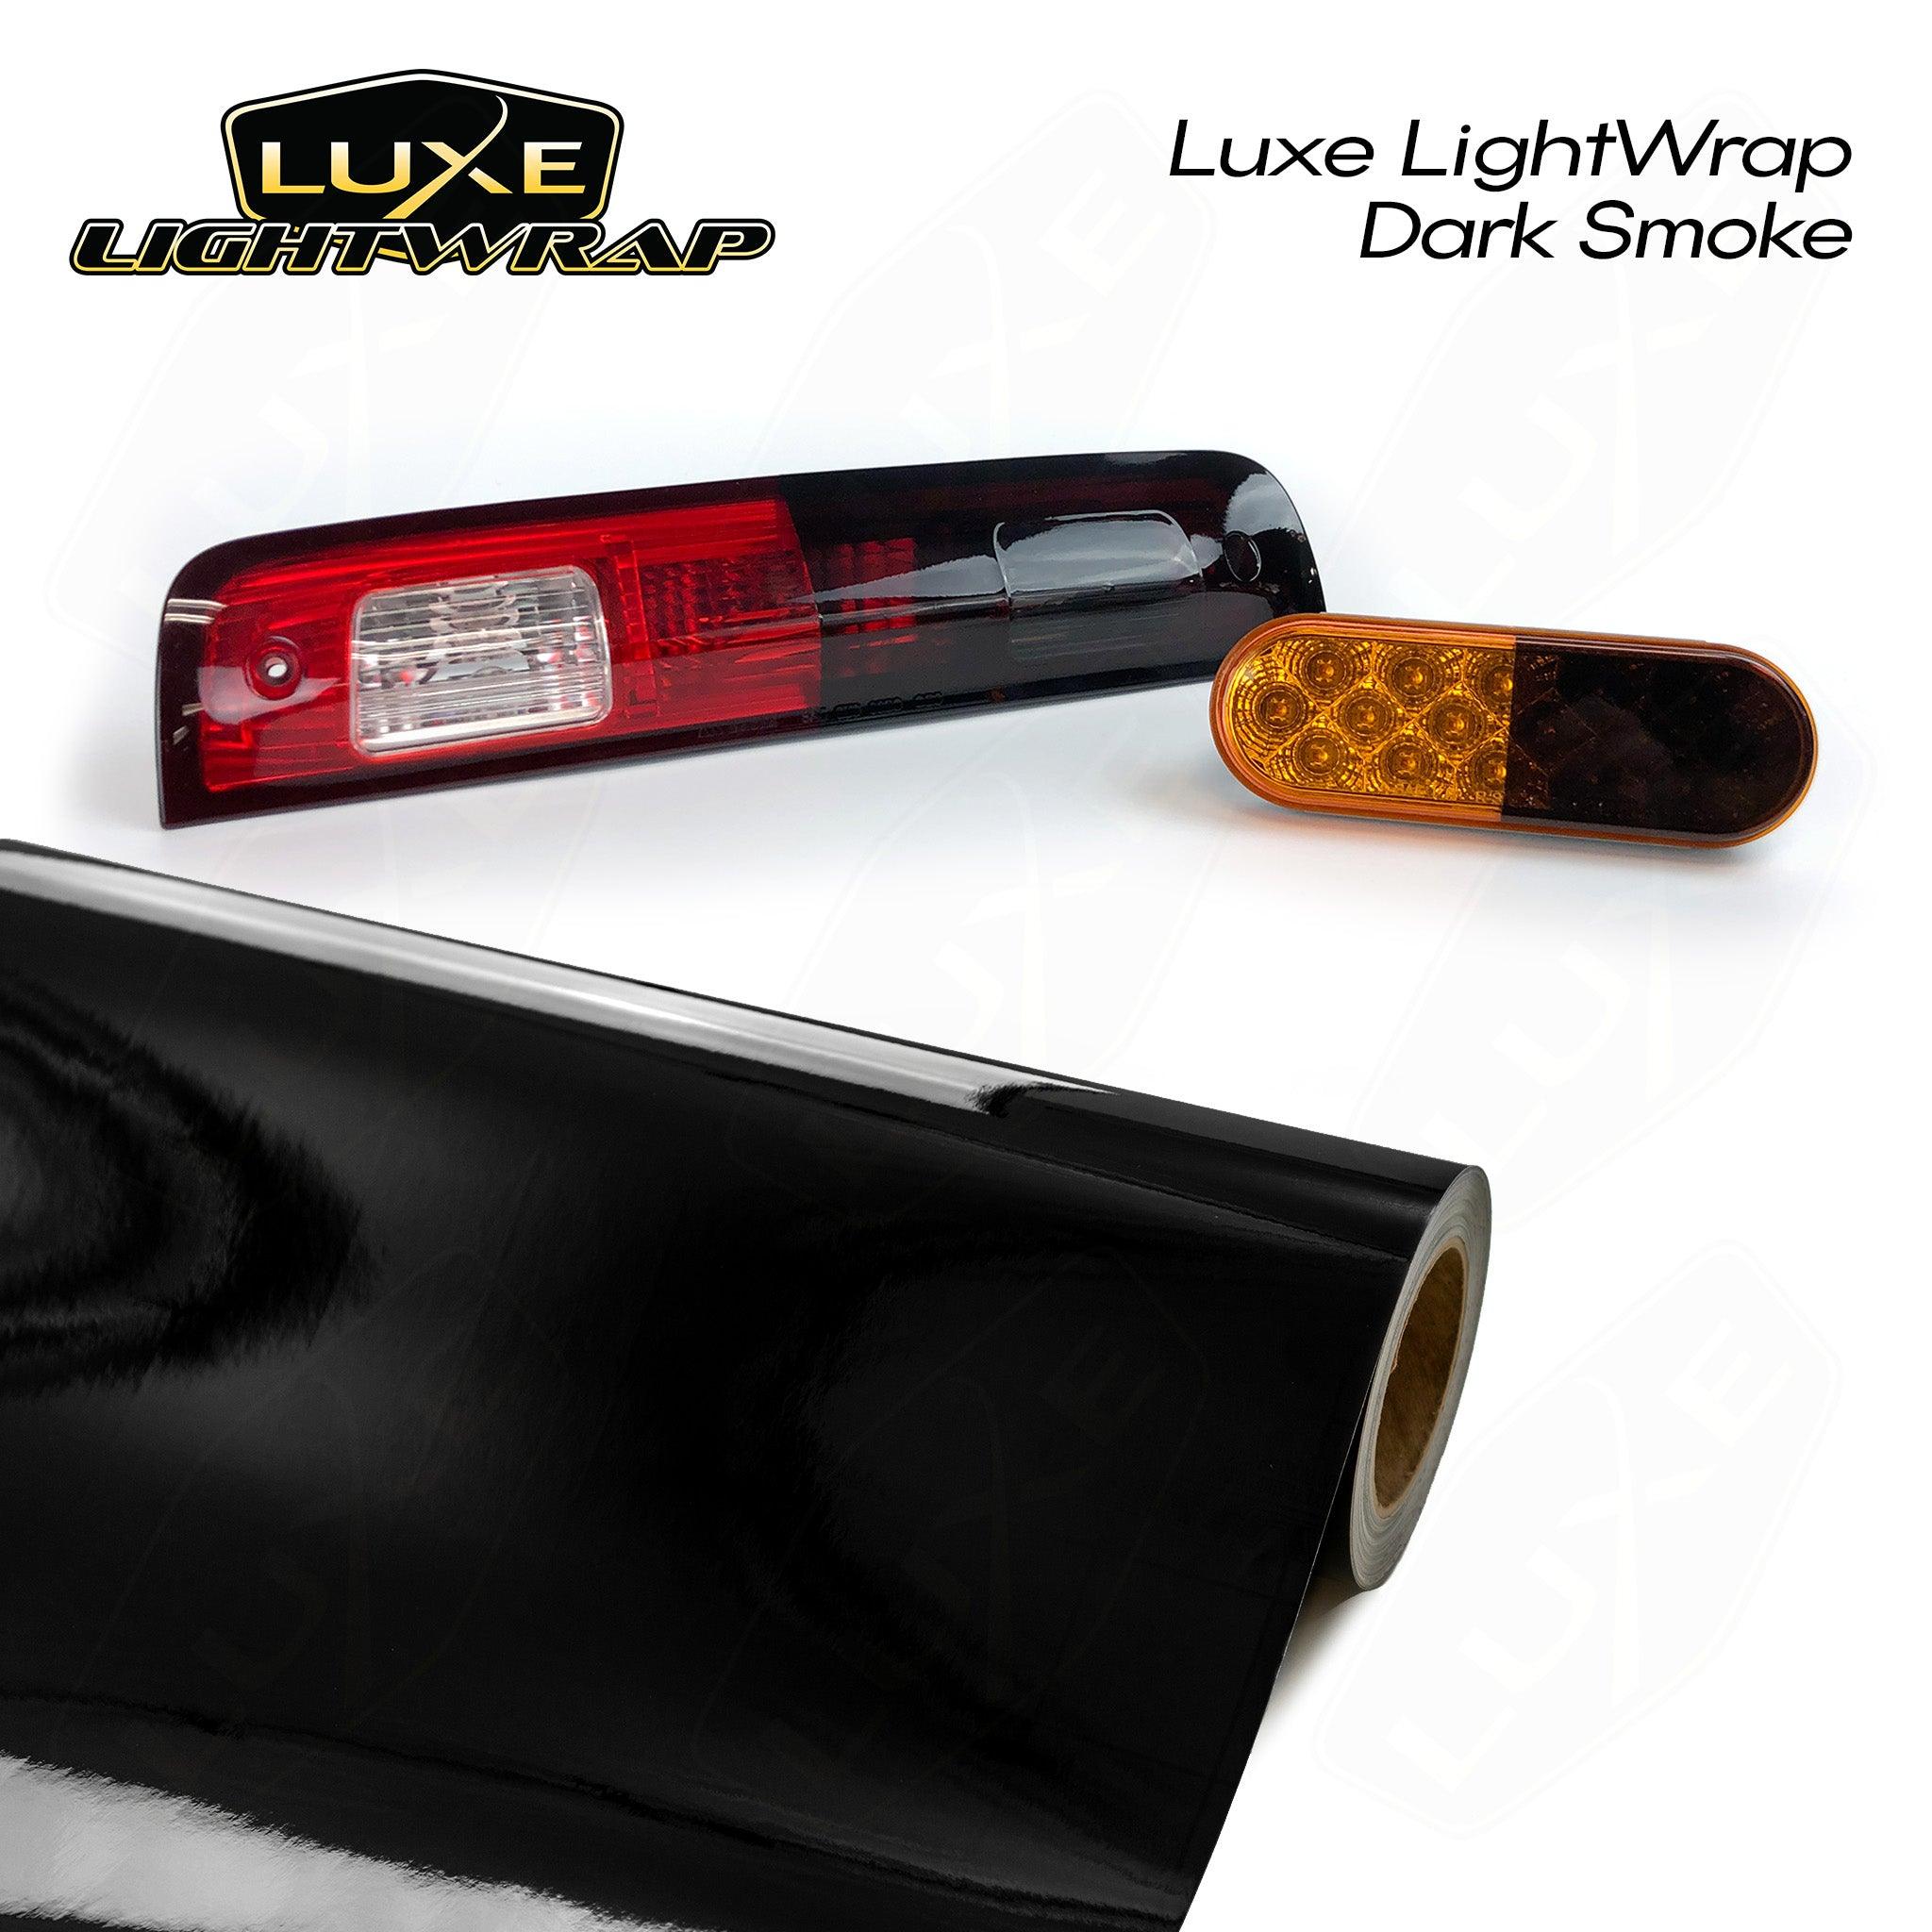 Luxe LightWrap Tint Vinyl - Dark Smoke - Luxe Auto Concepts